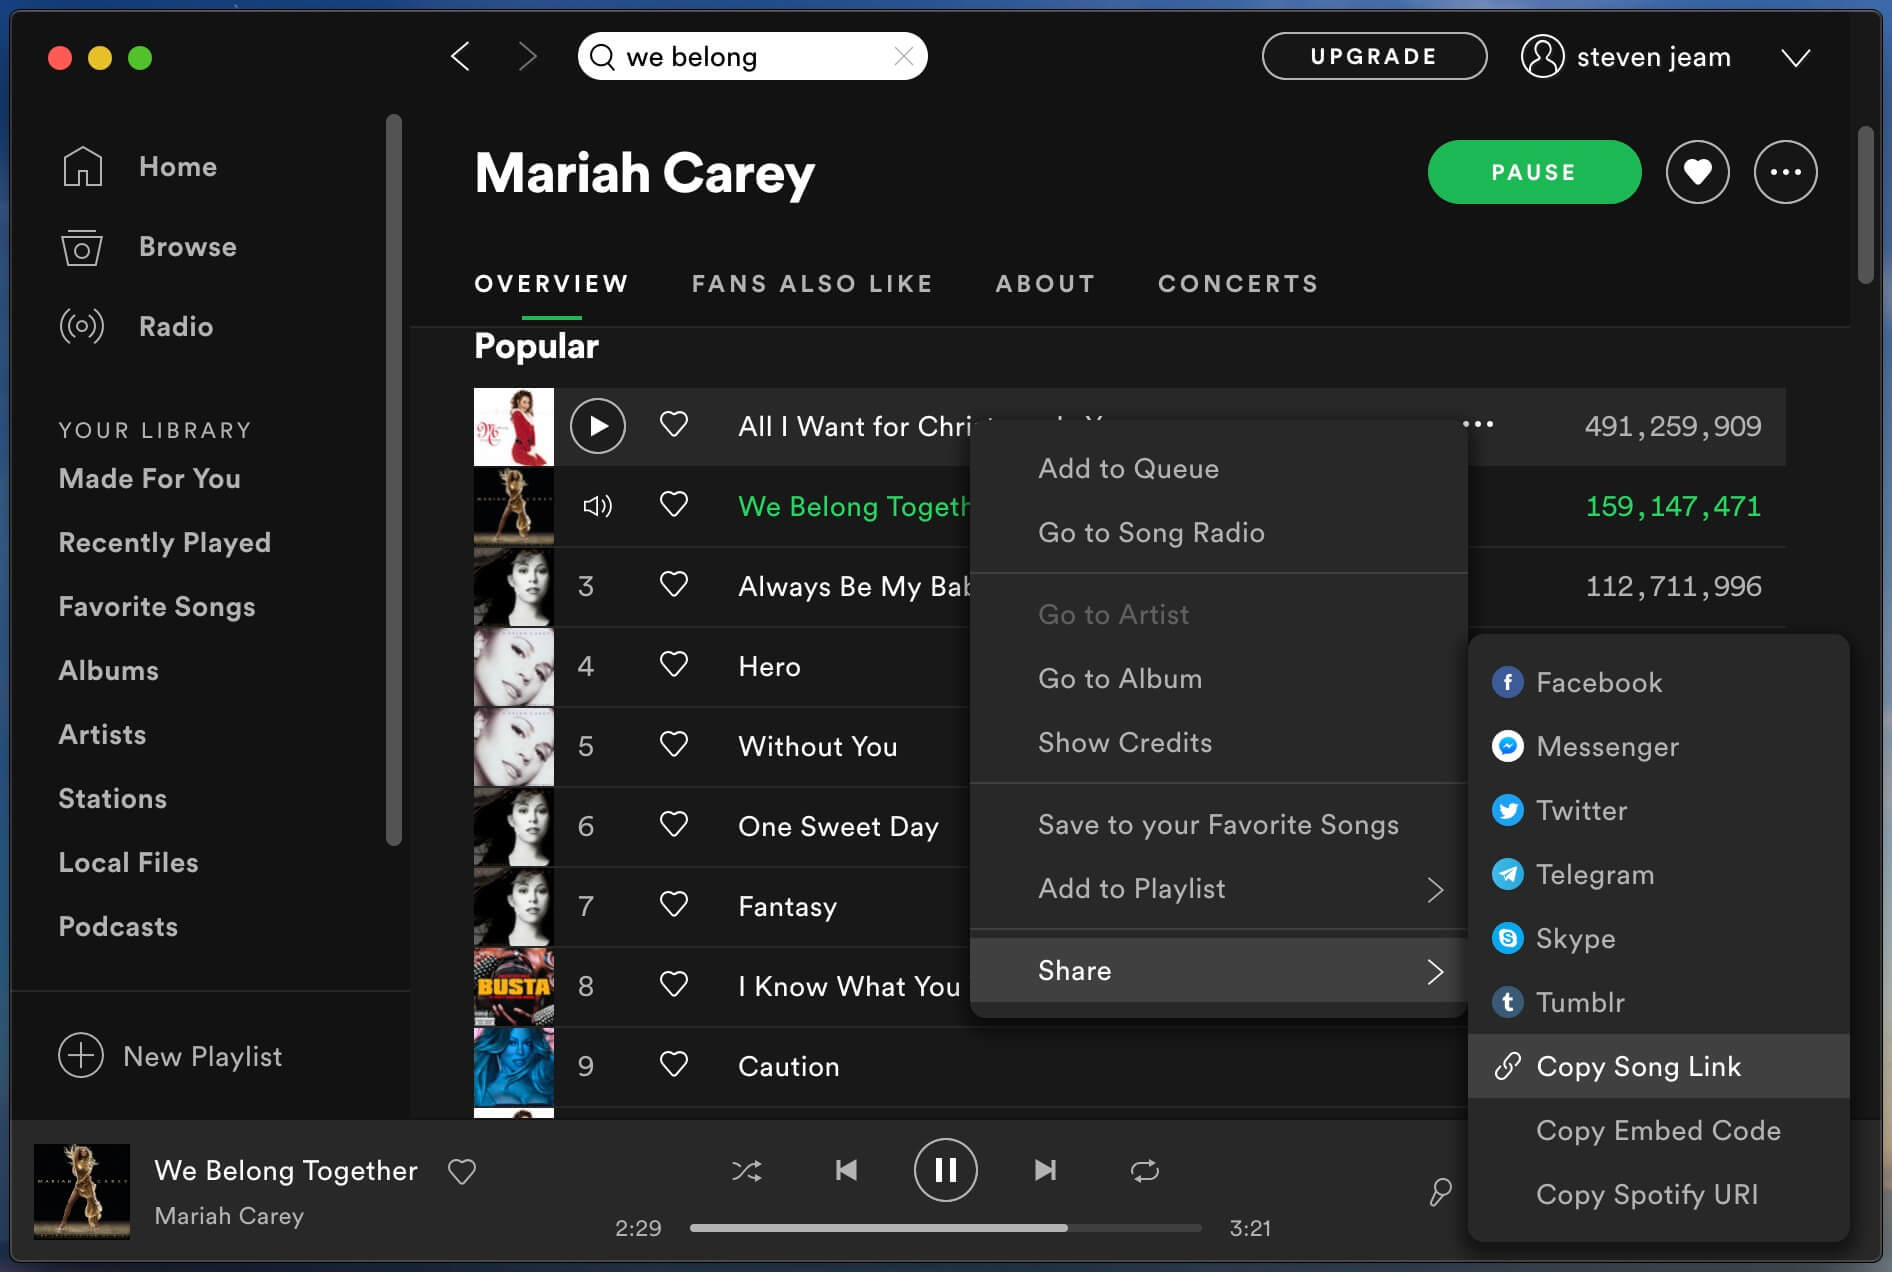 copy spotify playlist link